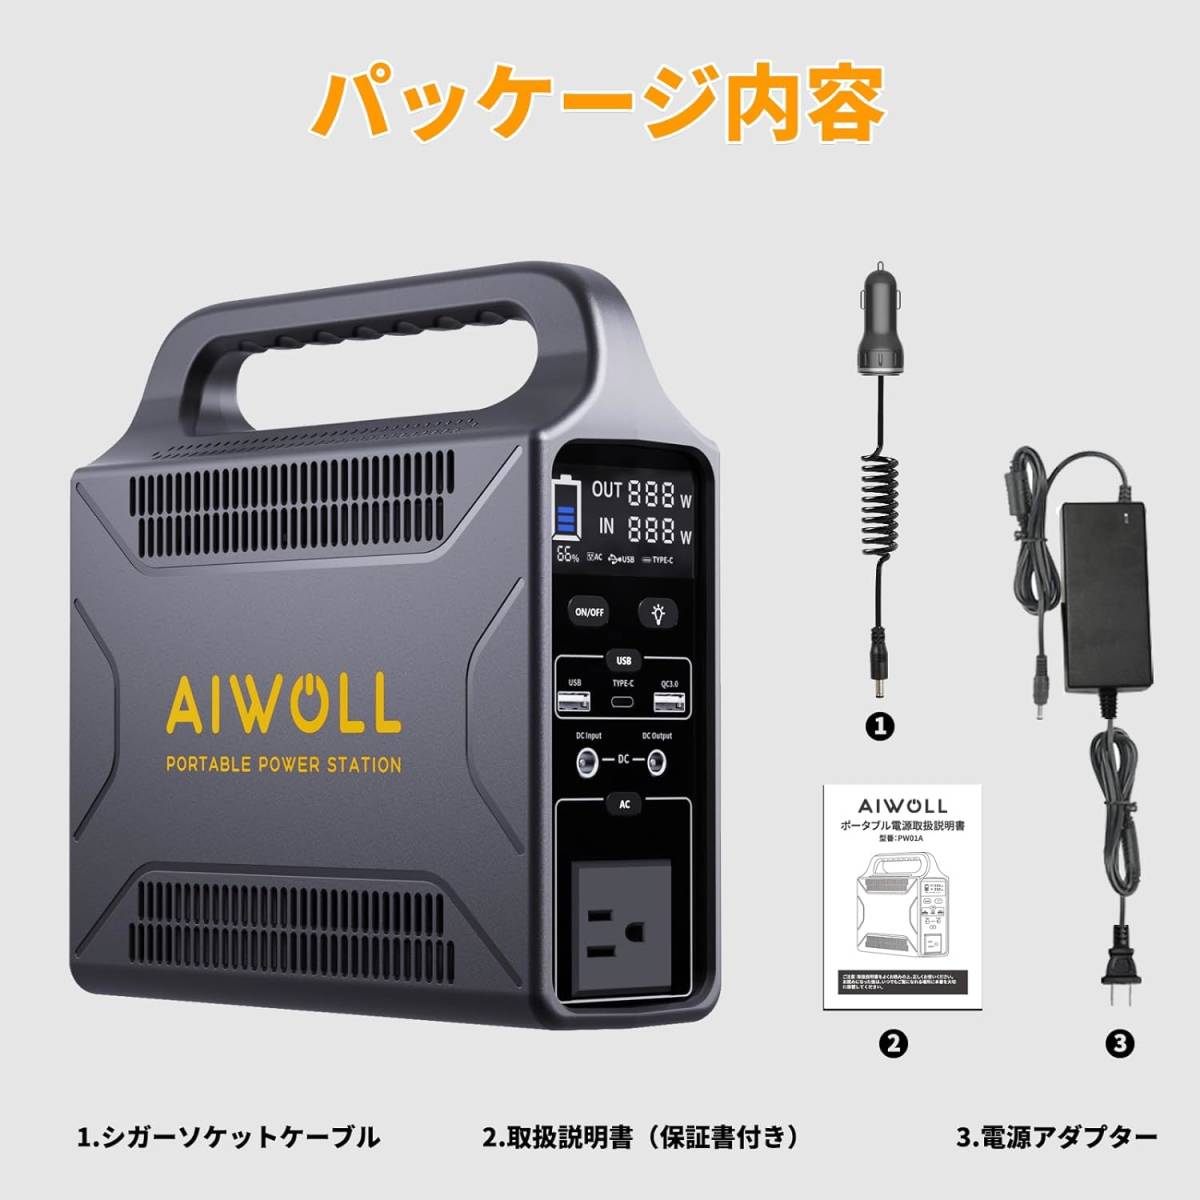 AIWOLL ポータブル電源 Wh大容量 家庭用 蓄電池 発電機 ポータブル